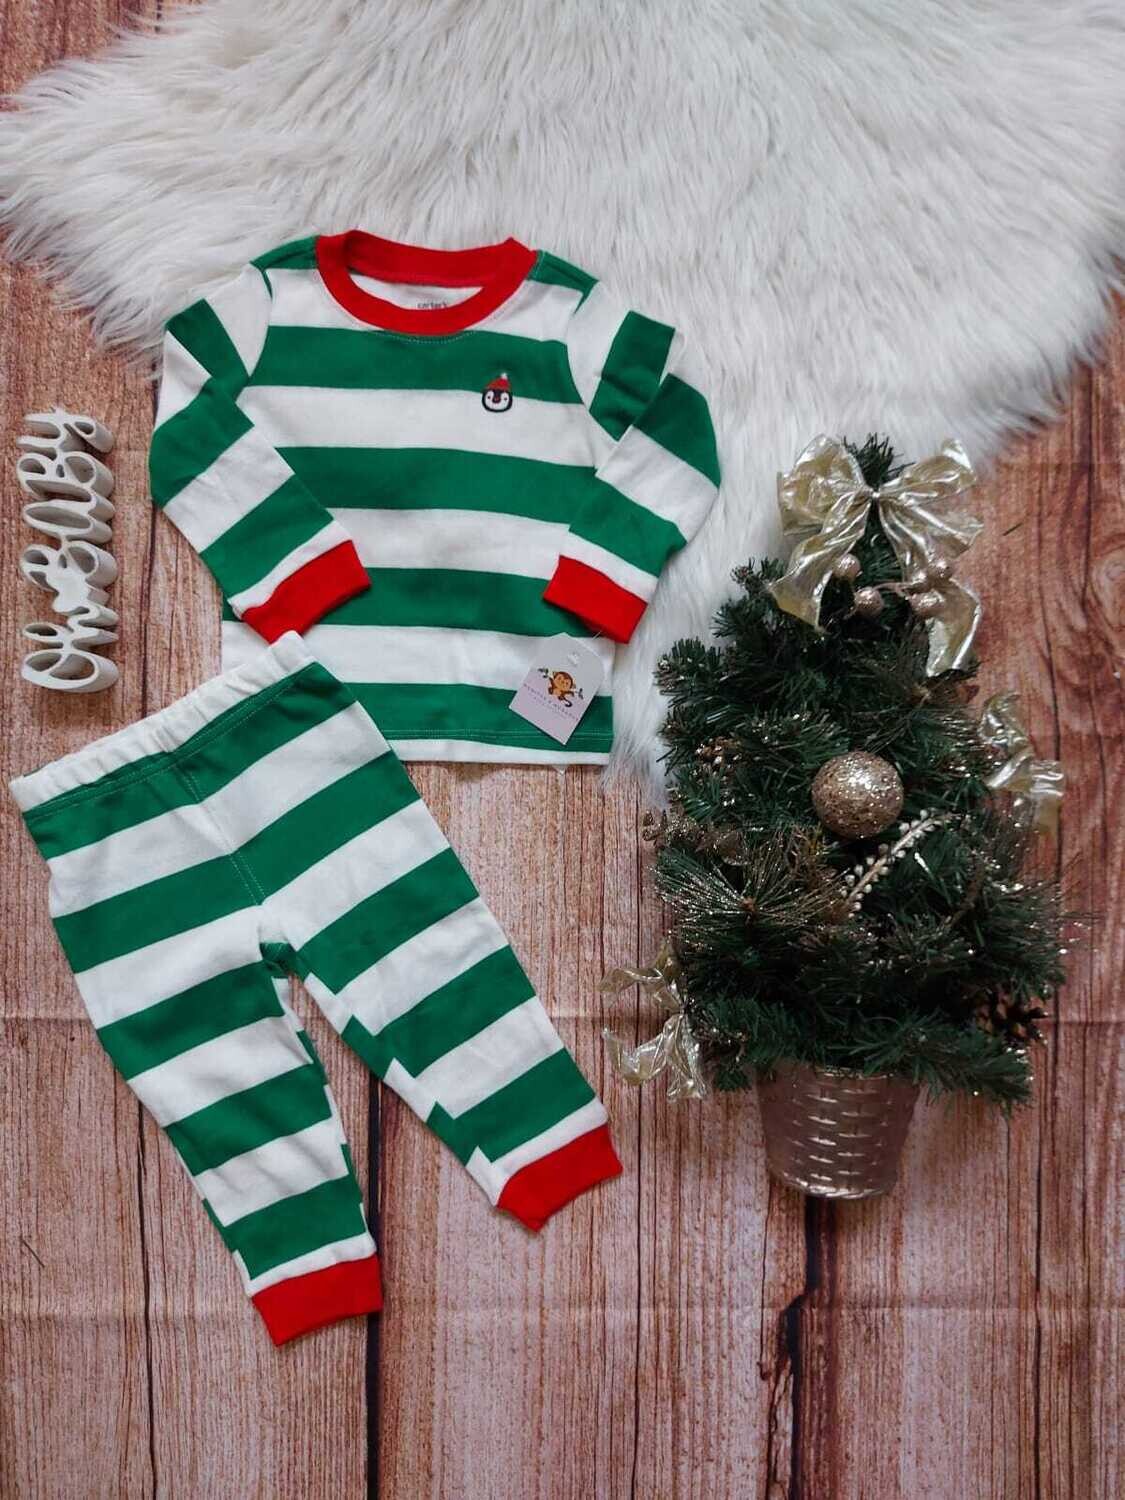 Pijama navideña 2 piezas Carter's, Busito + pantalón a rayas verdes y blancas, 12m